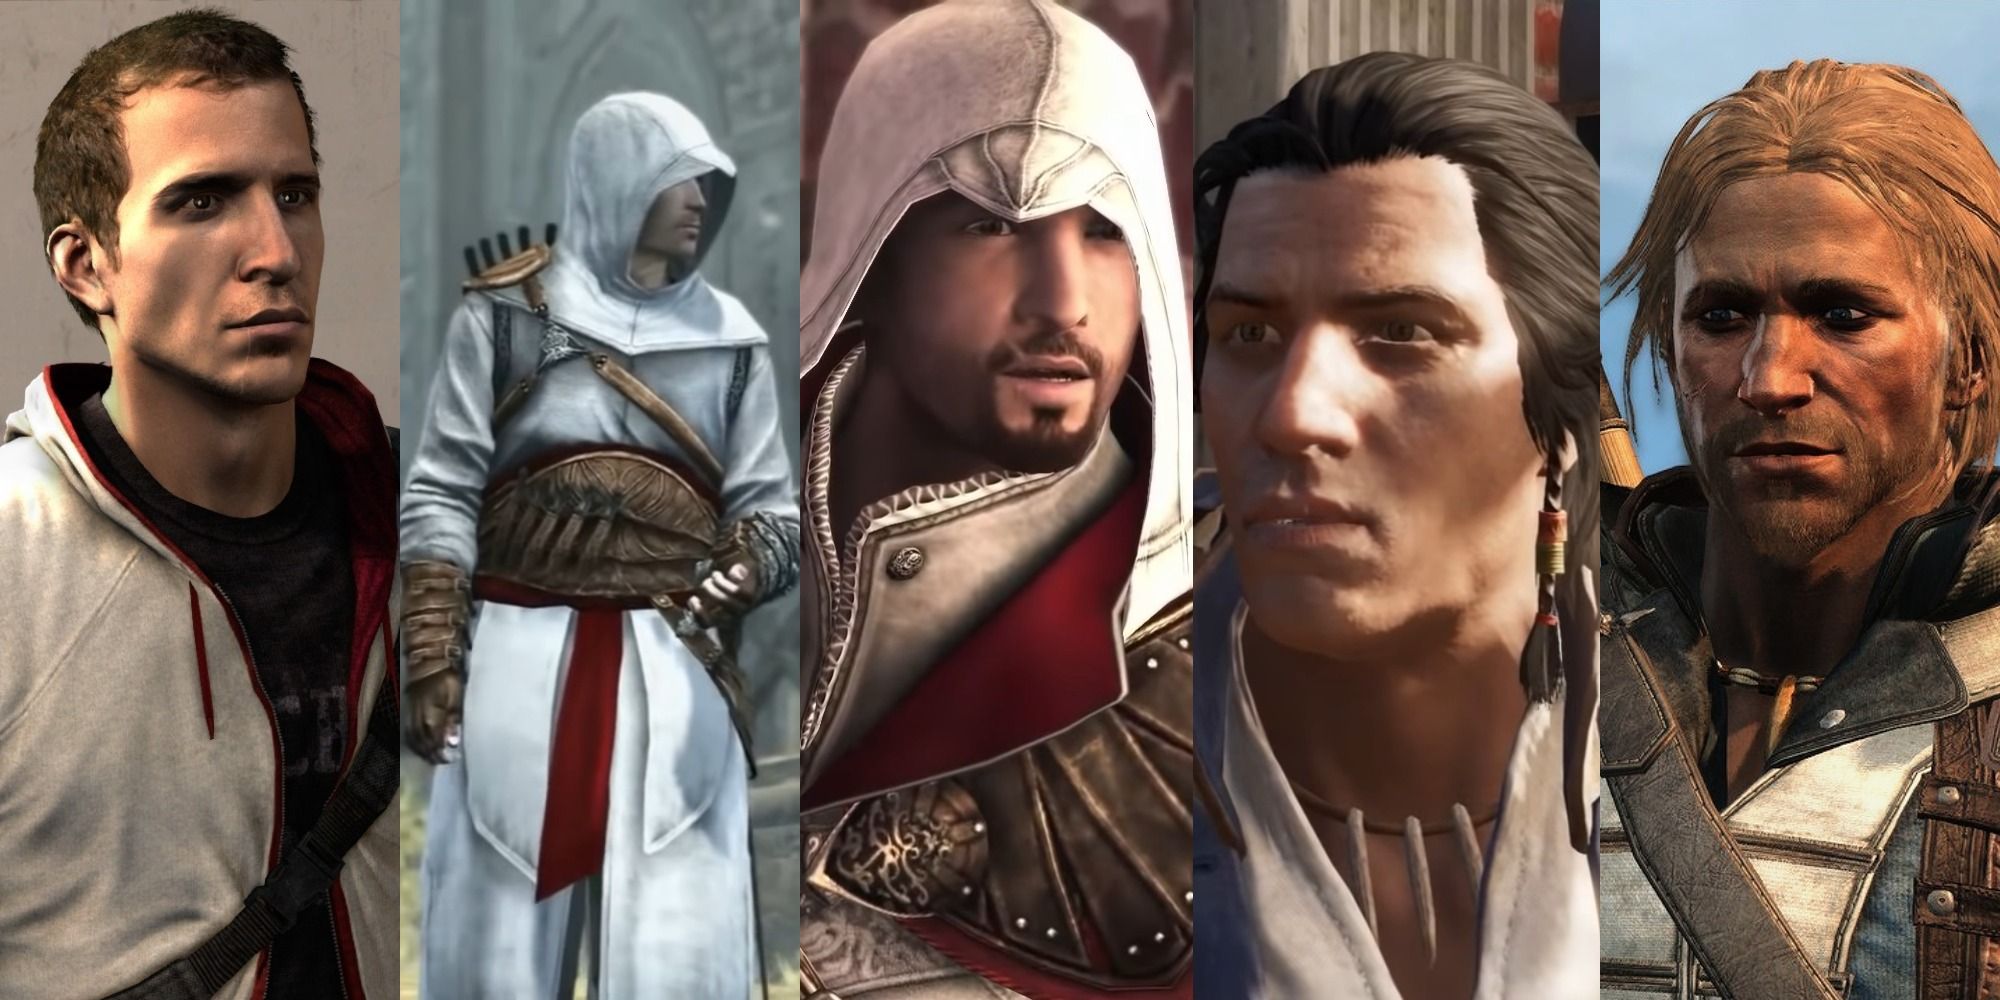 Assassin's Creed Split Image Of Desmond Miles, Altair, Ezio, Connor, and Edward